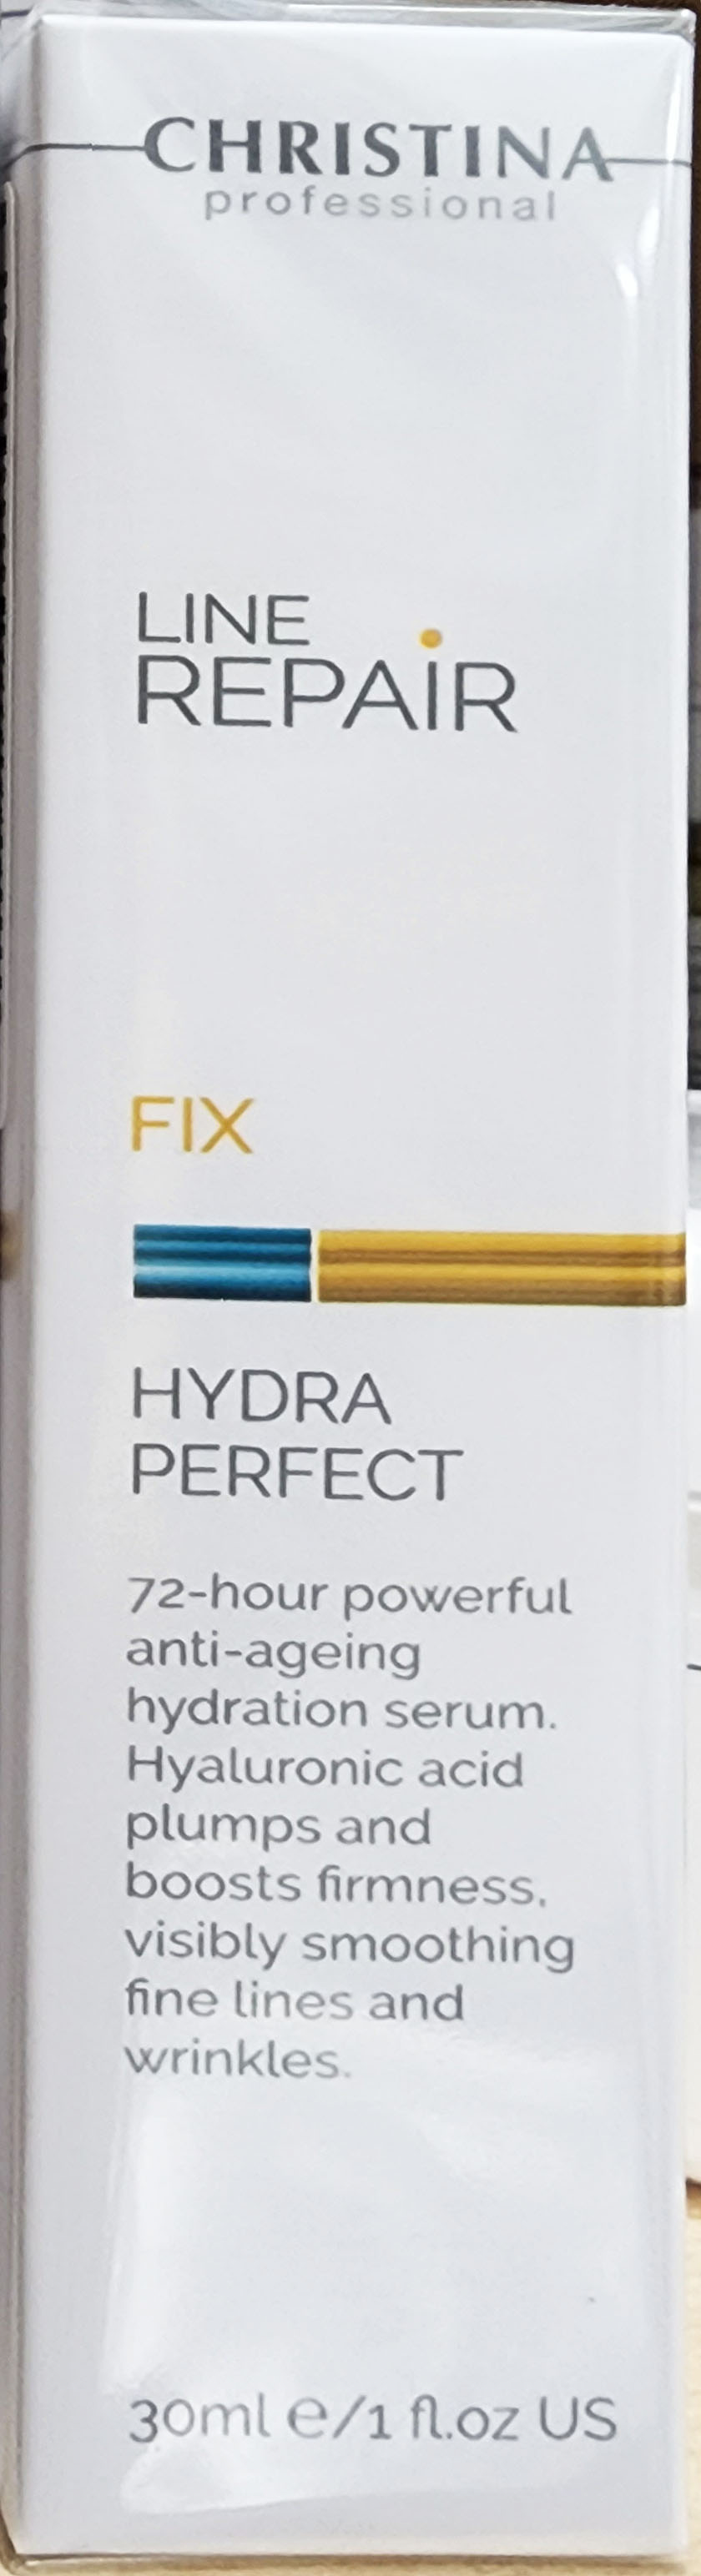 Christina Line Repair - Fix - Hydra Perfect 30ml